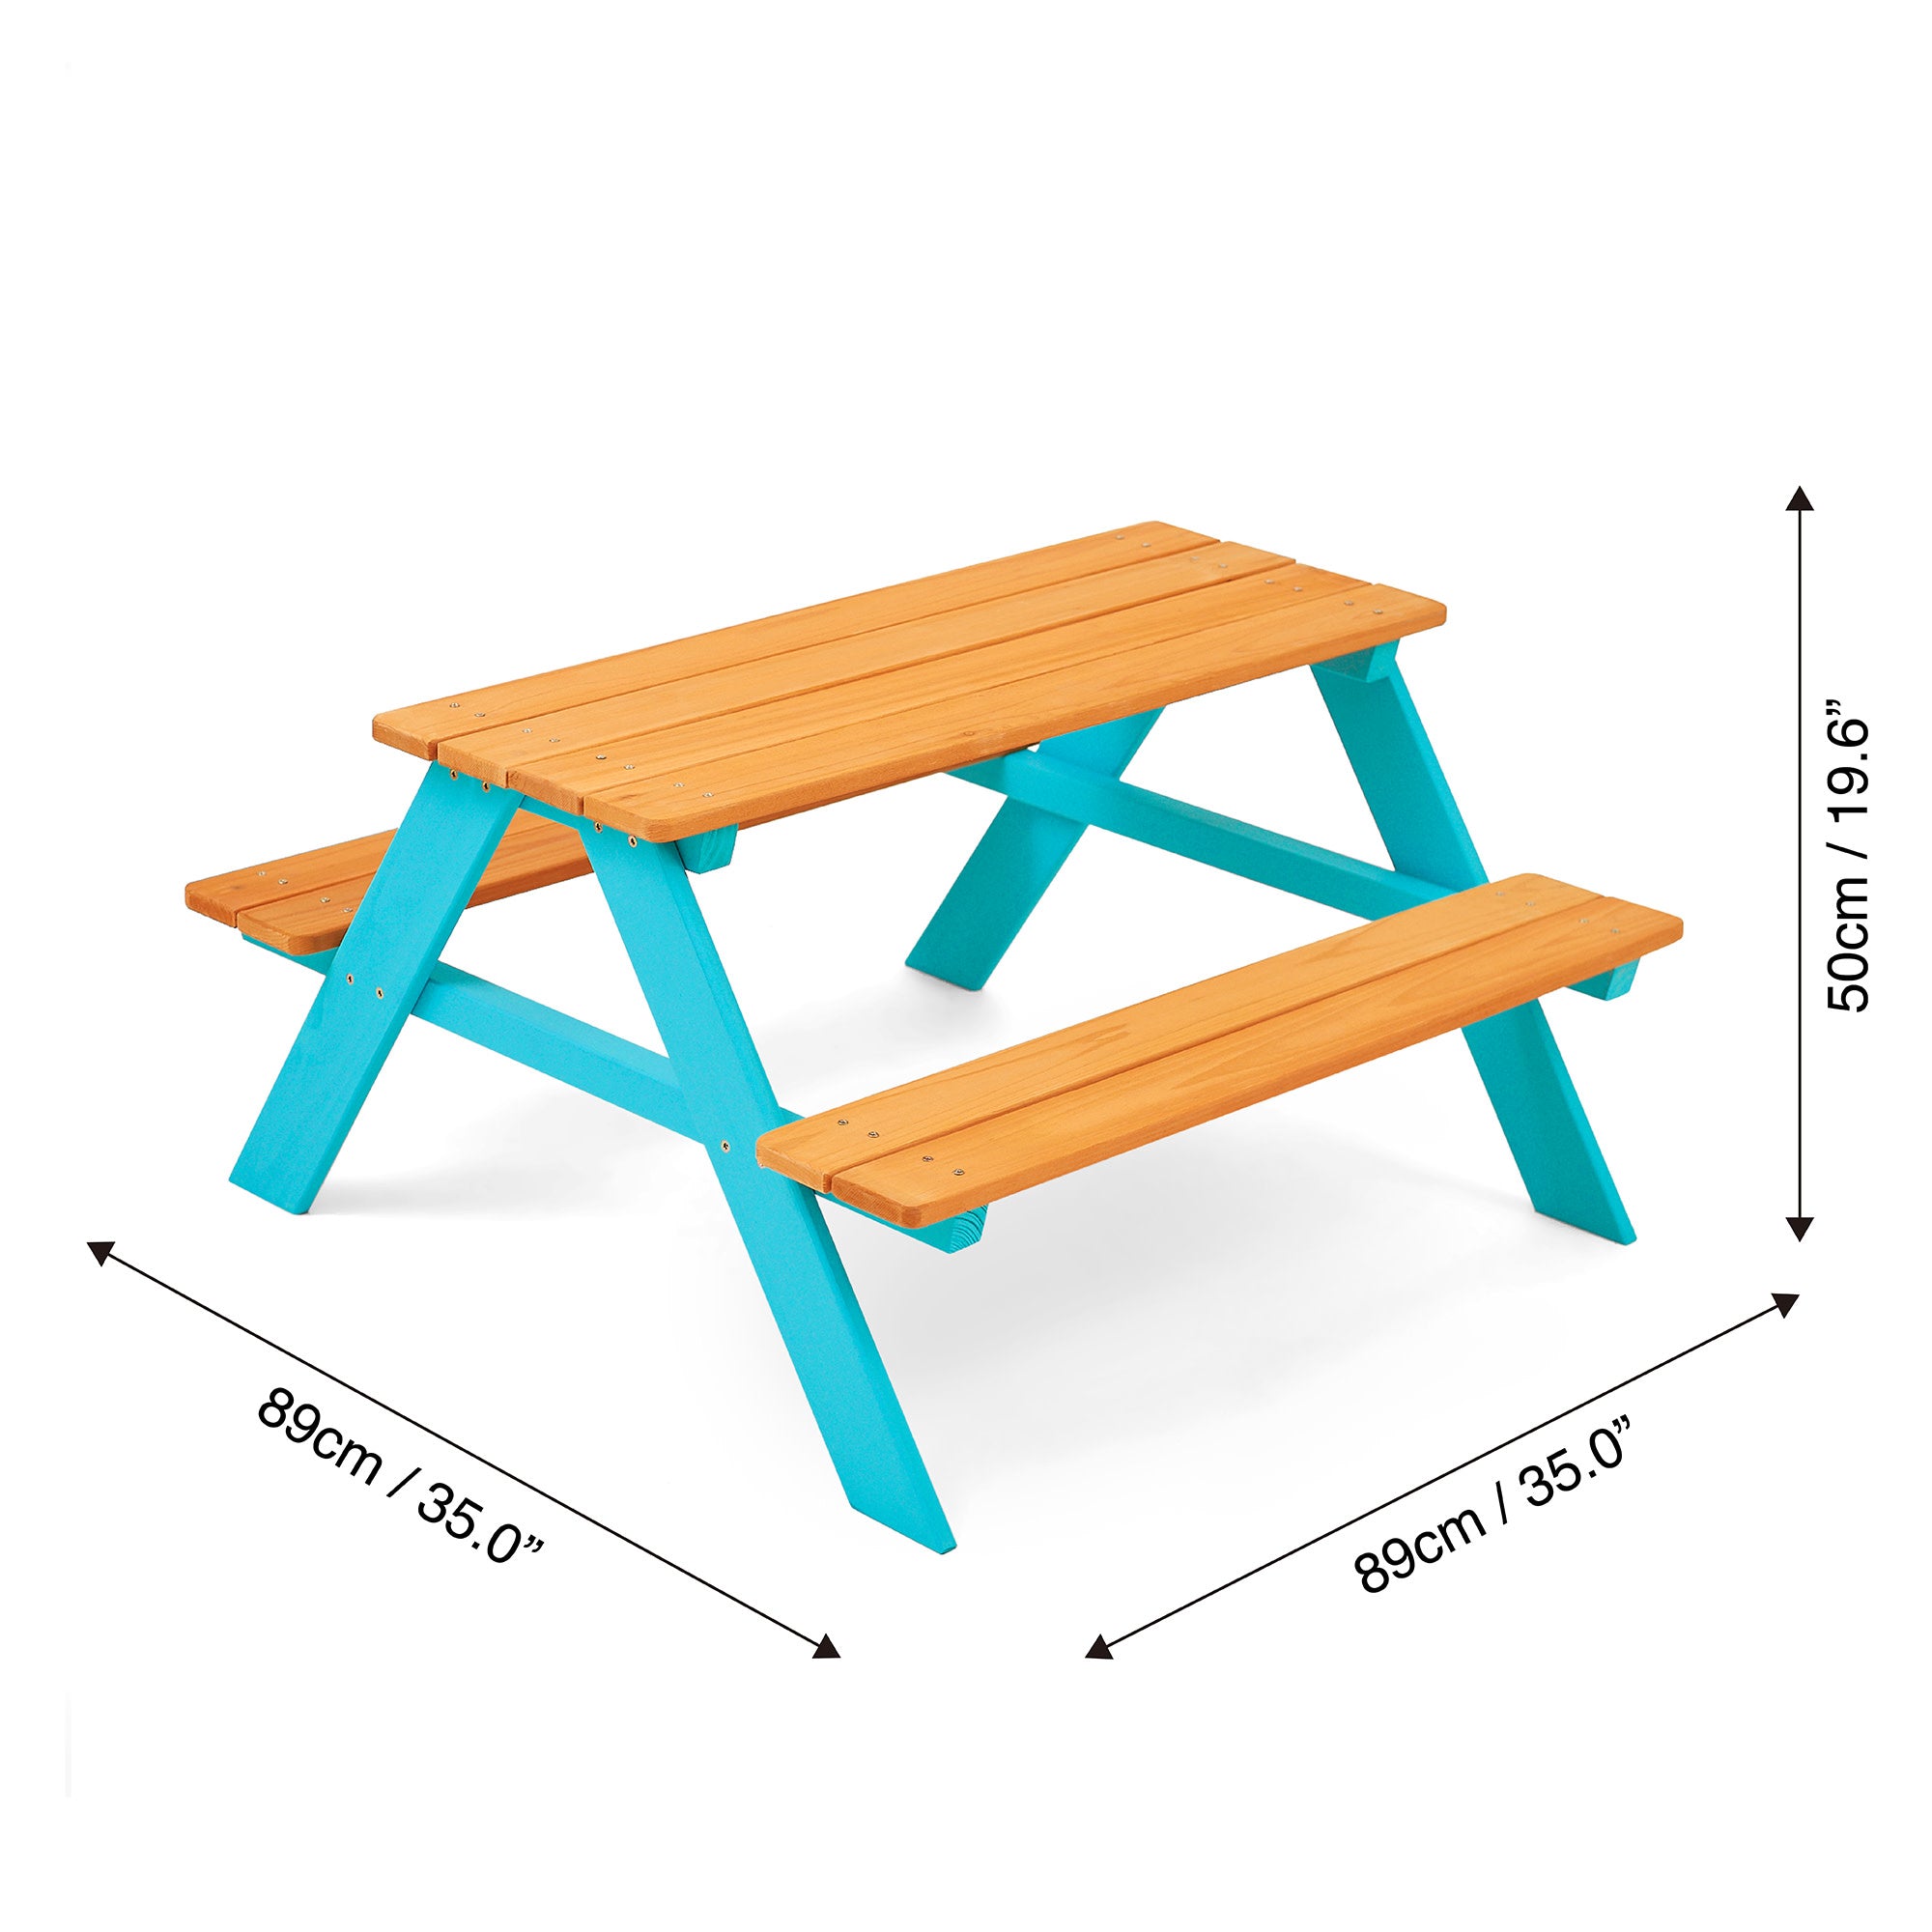 Teamson Kids Child Sized Wooden Outdoor Picnic Table, Warm Honey/Aqua